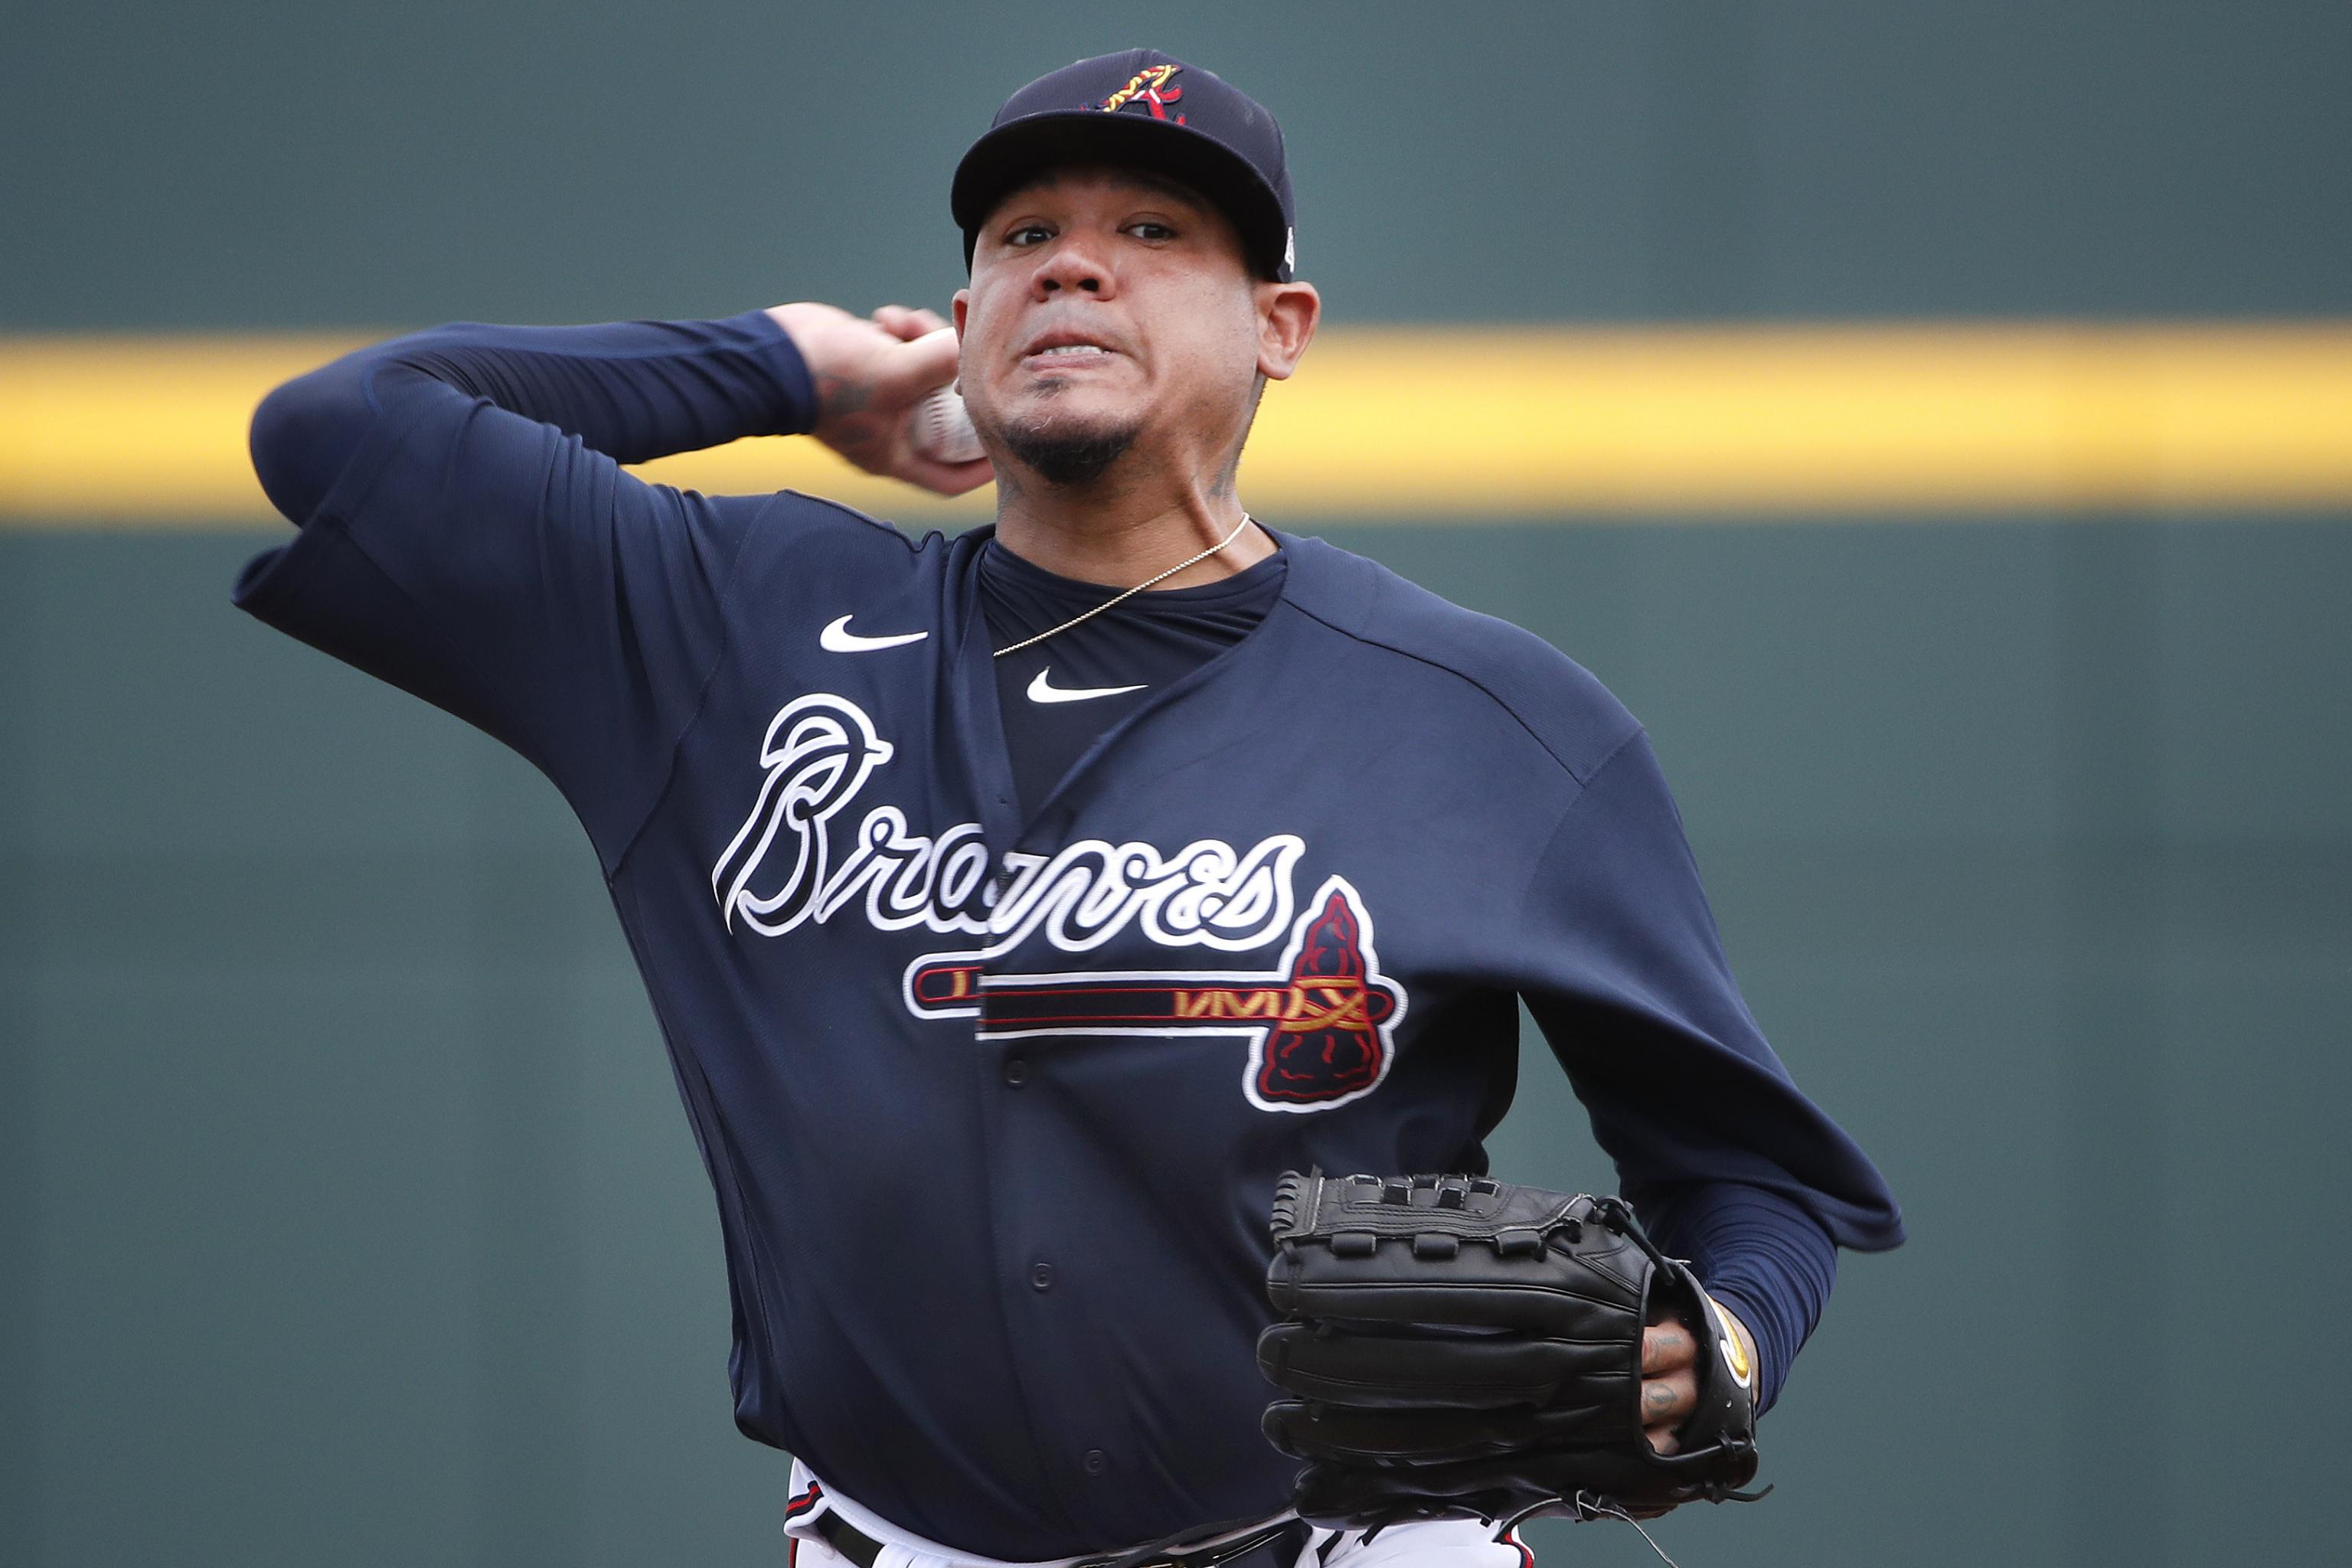 Braves' Felix Hernandez won't pitch in 2020